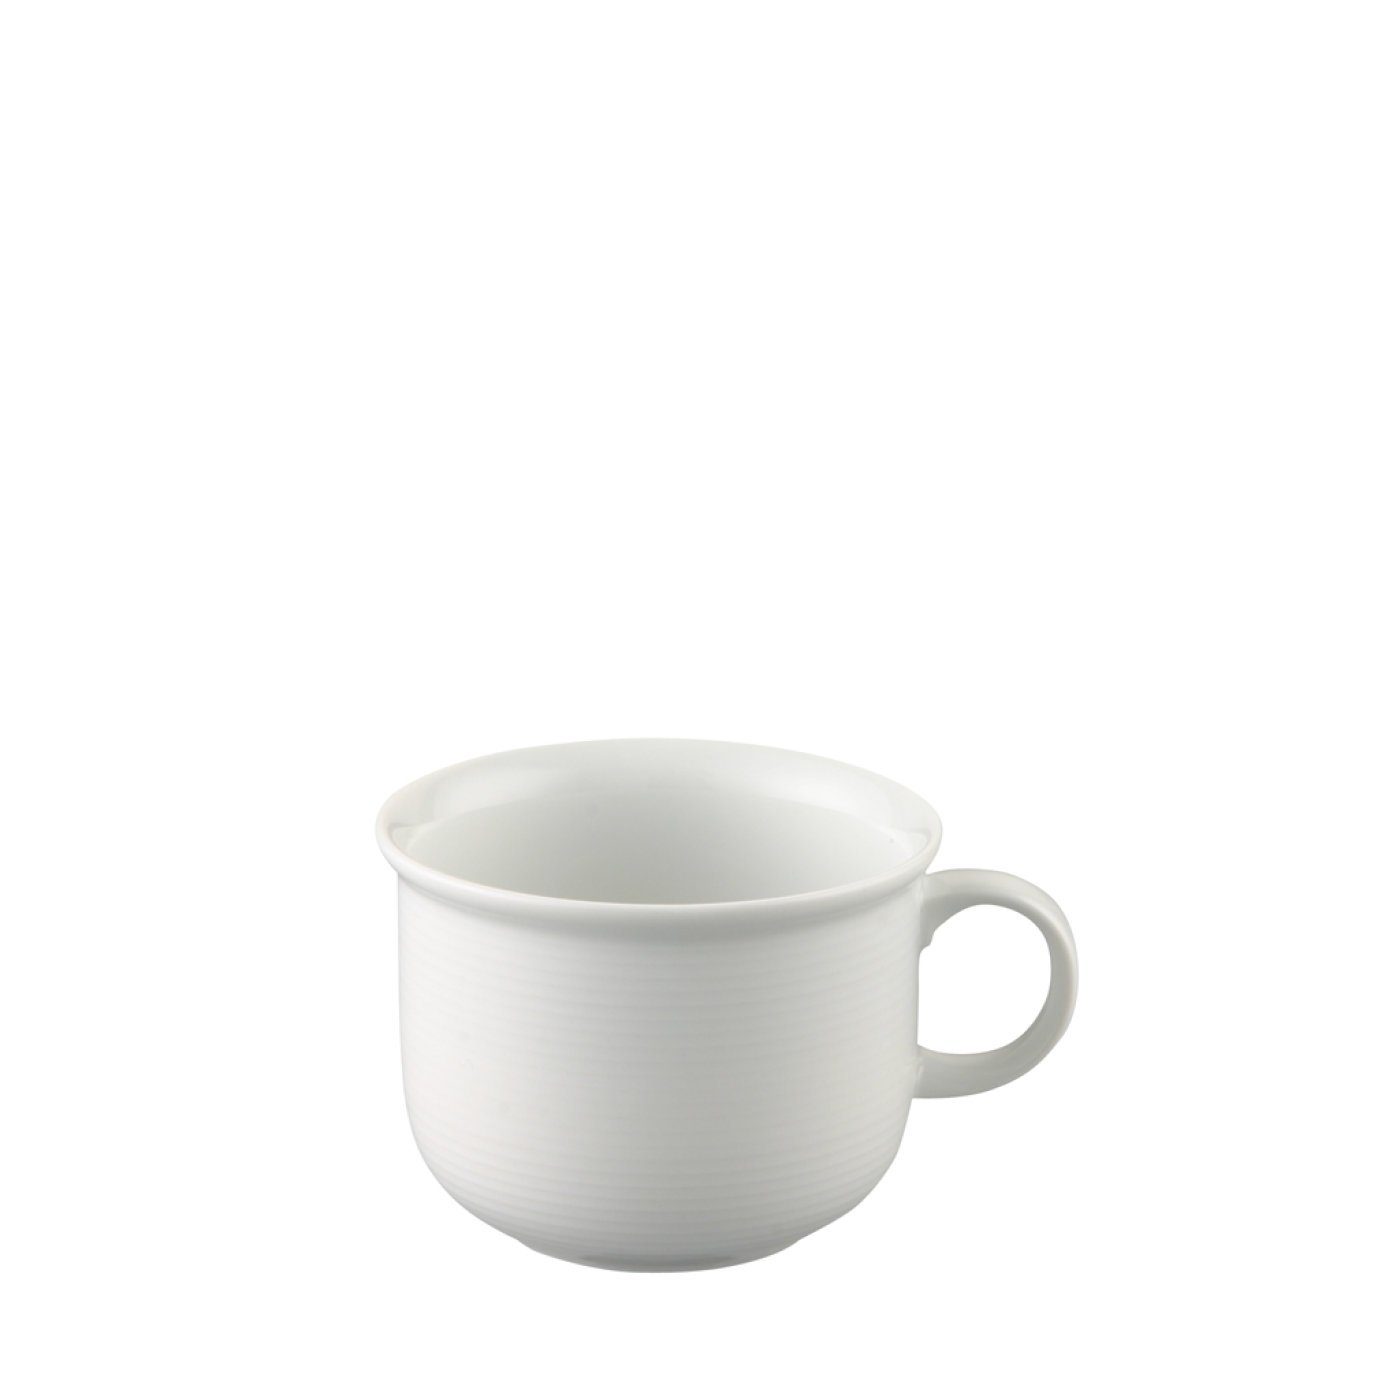 Kaffee-Obertasse - TREND Weiß Thomas Porzellan, mikrowellengeeignet Porzellan, Tasse 6 Stück, Porzellan - und spülmaschinenfest